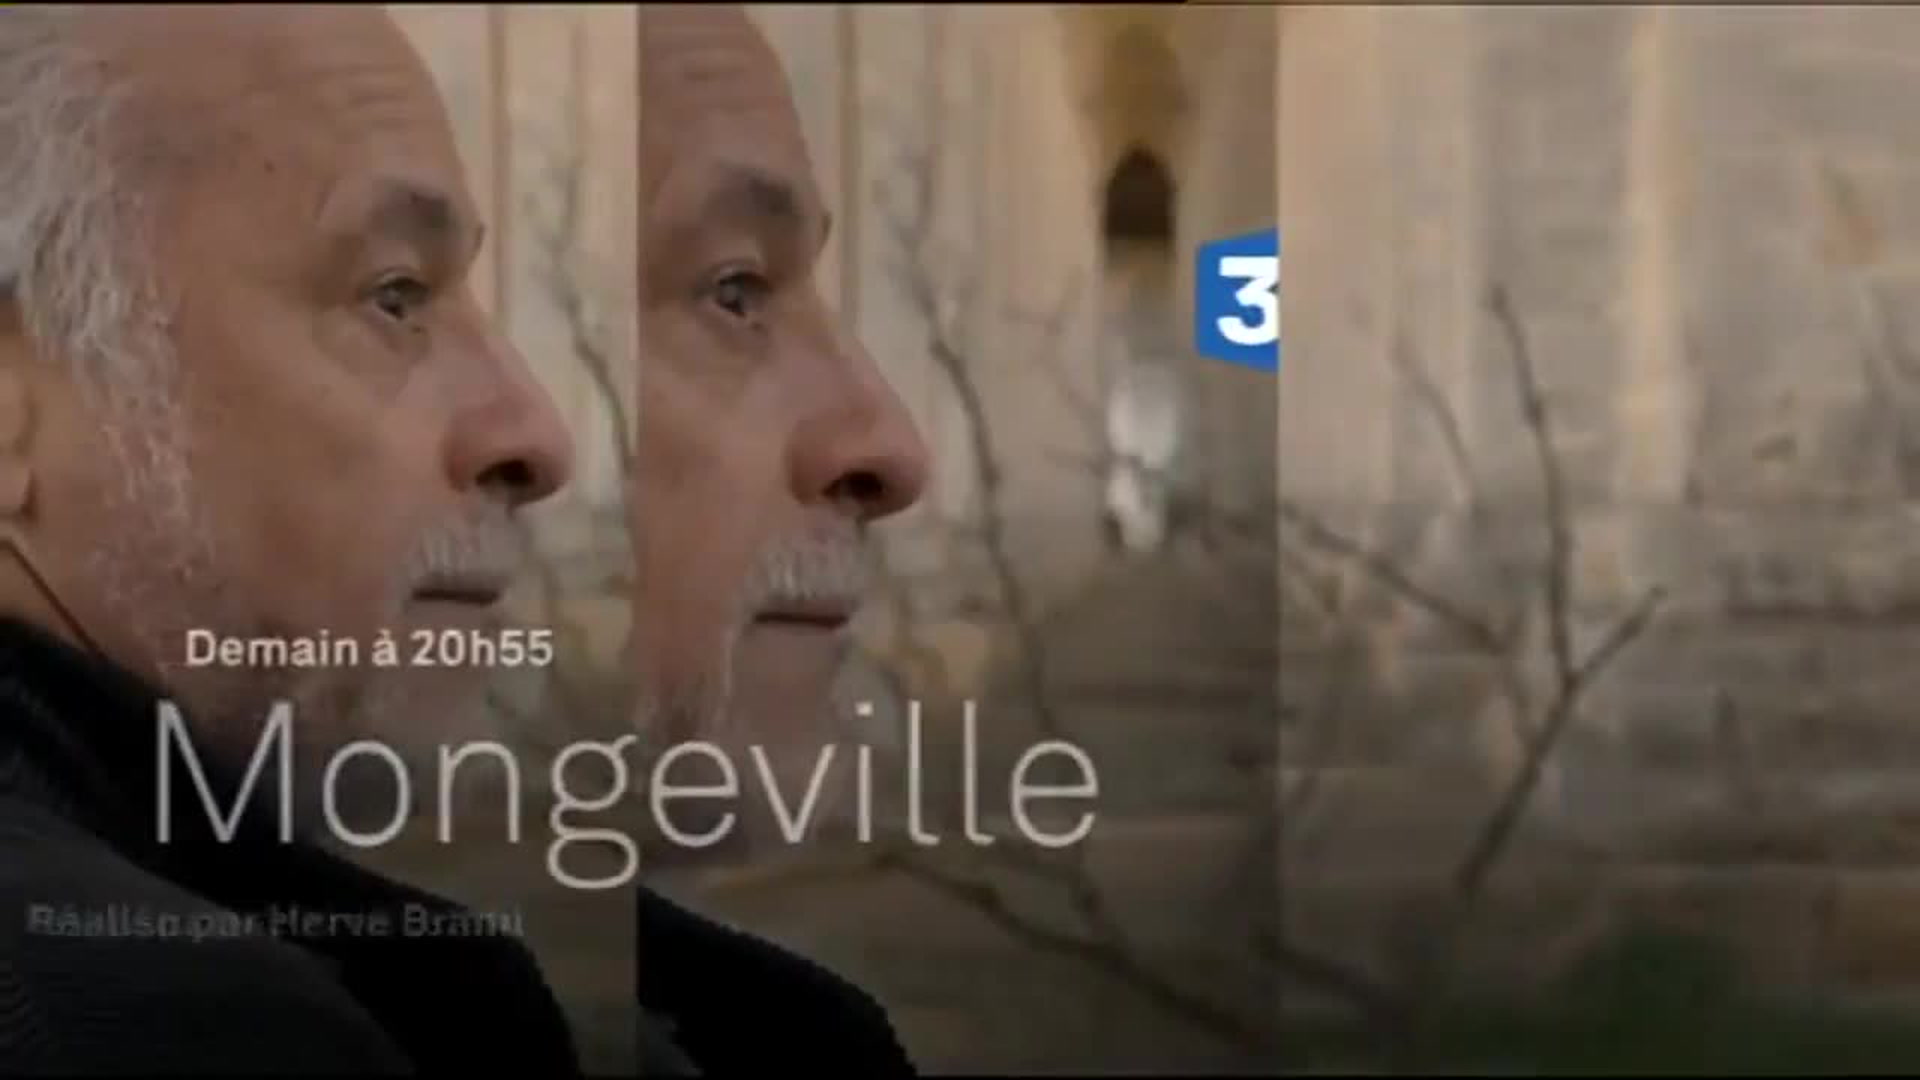 Mongeville : Disparition inquiétante